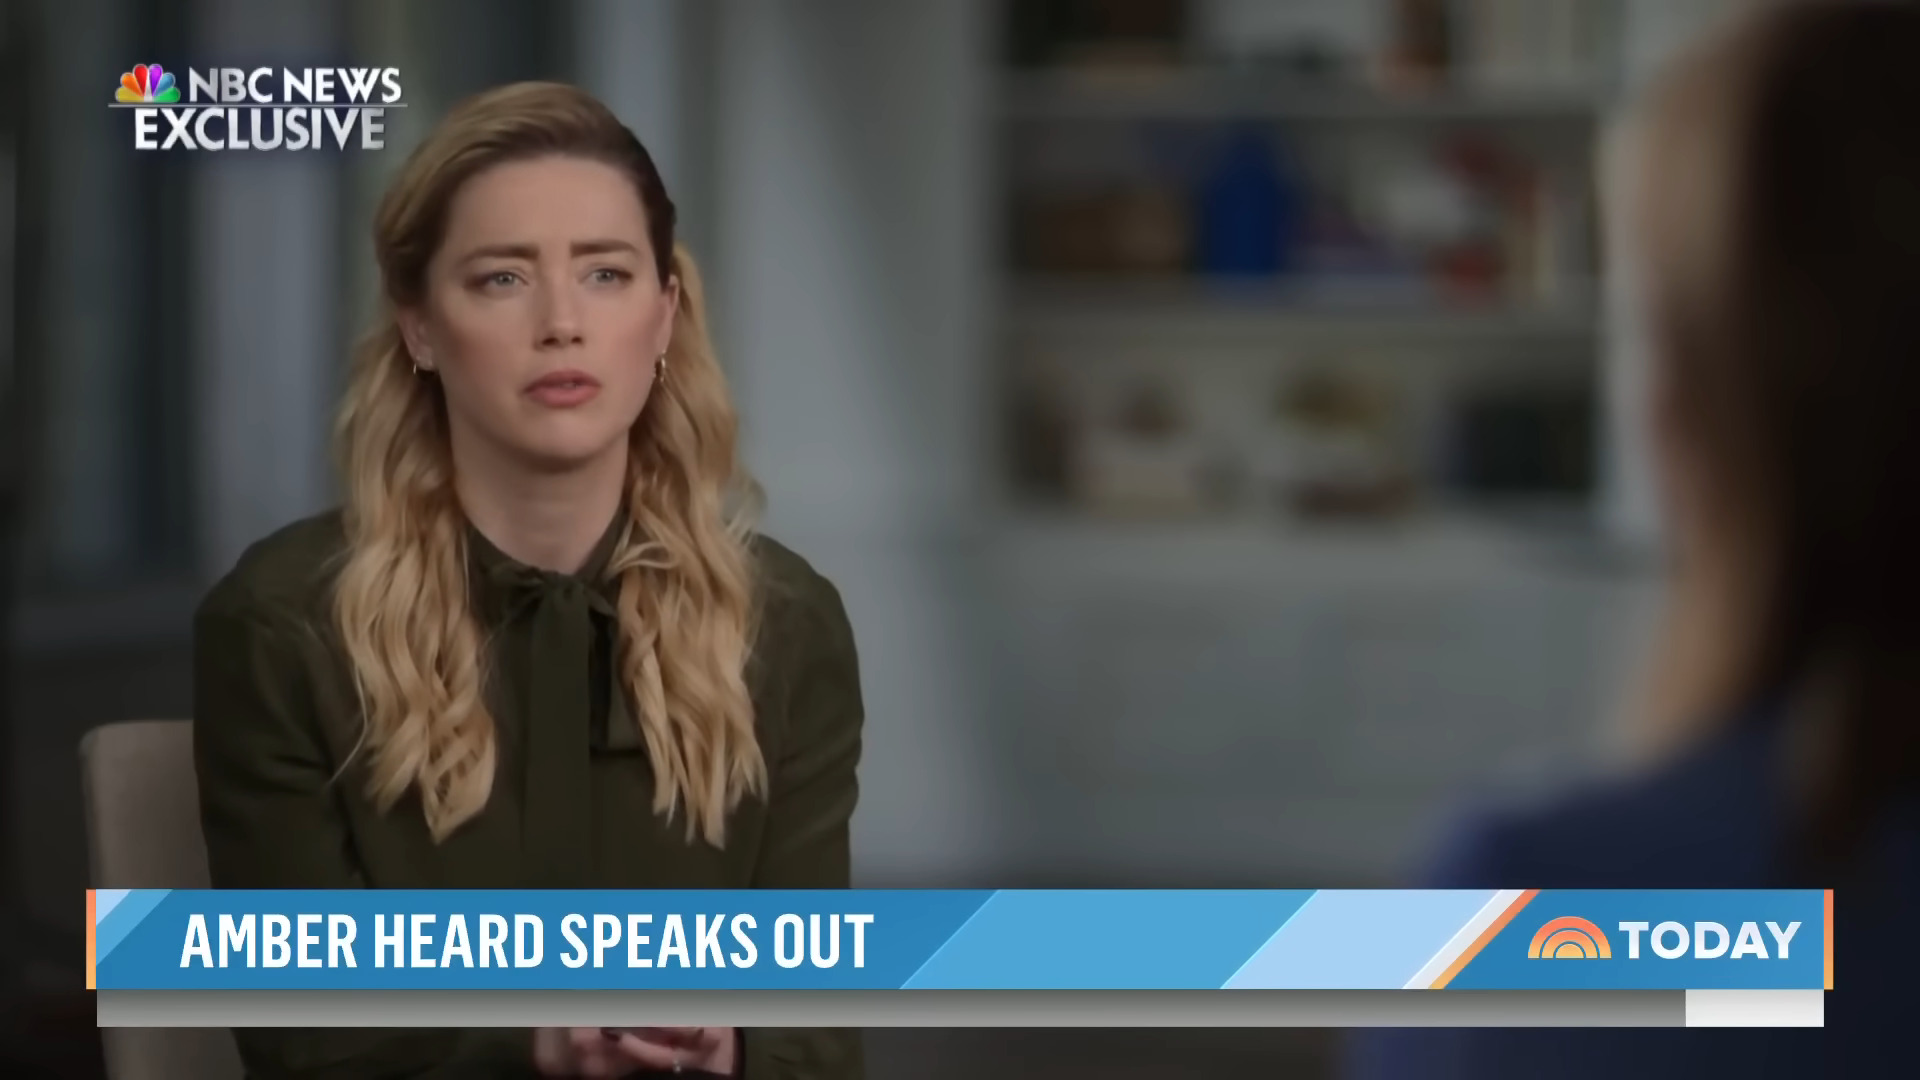 Savannah Guthrie interviews Amber Heard for NBC News (2022)